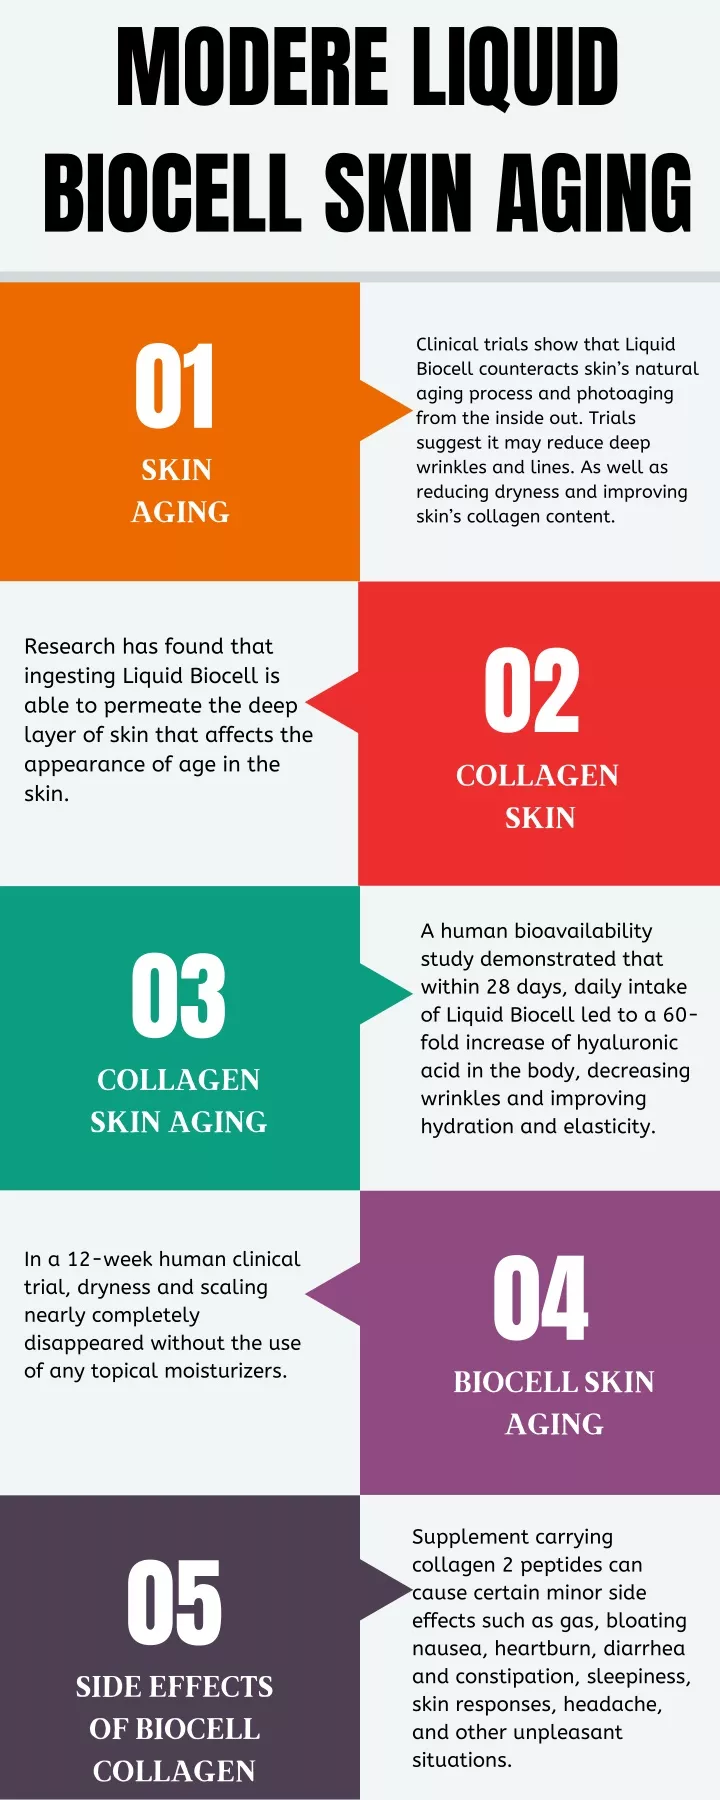 modere liquid biocell skin aging